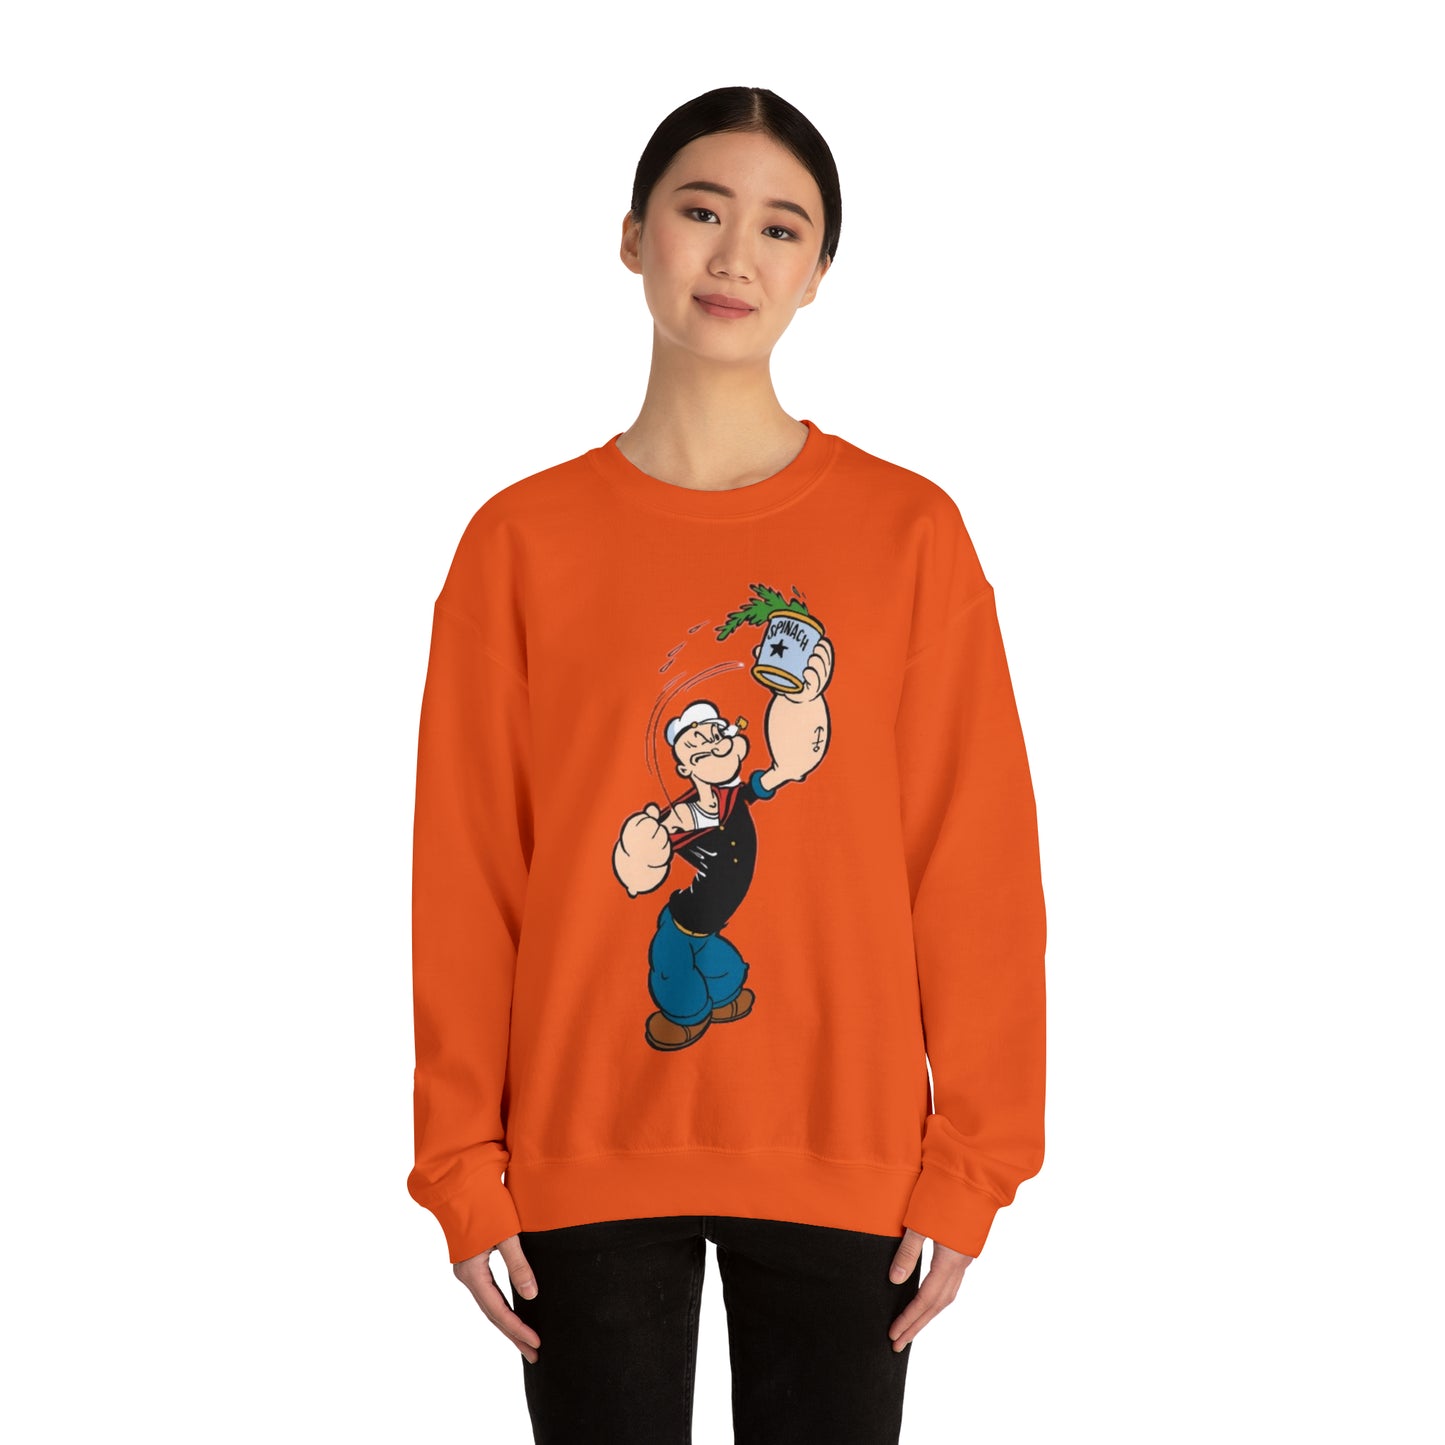 Popeye Spinach Sweatshirt